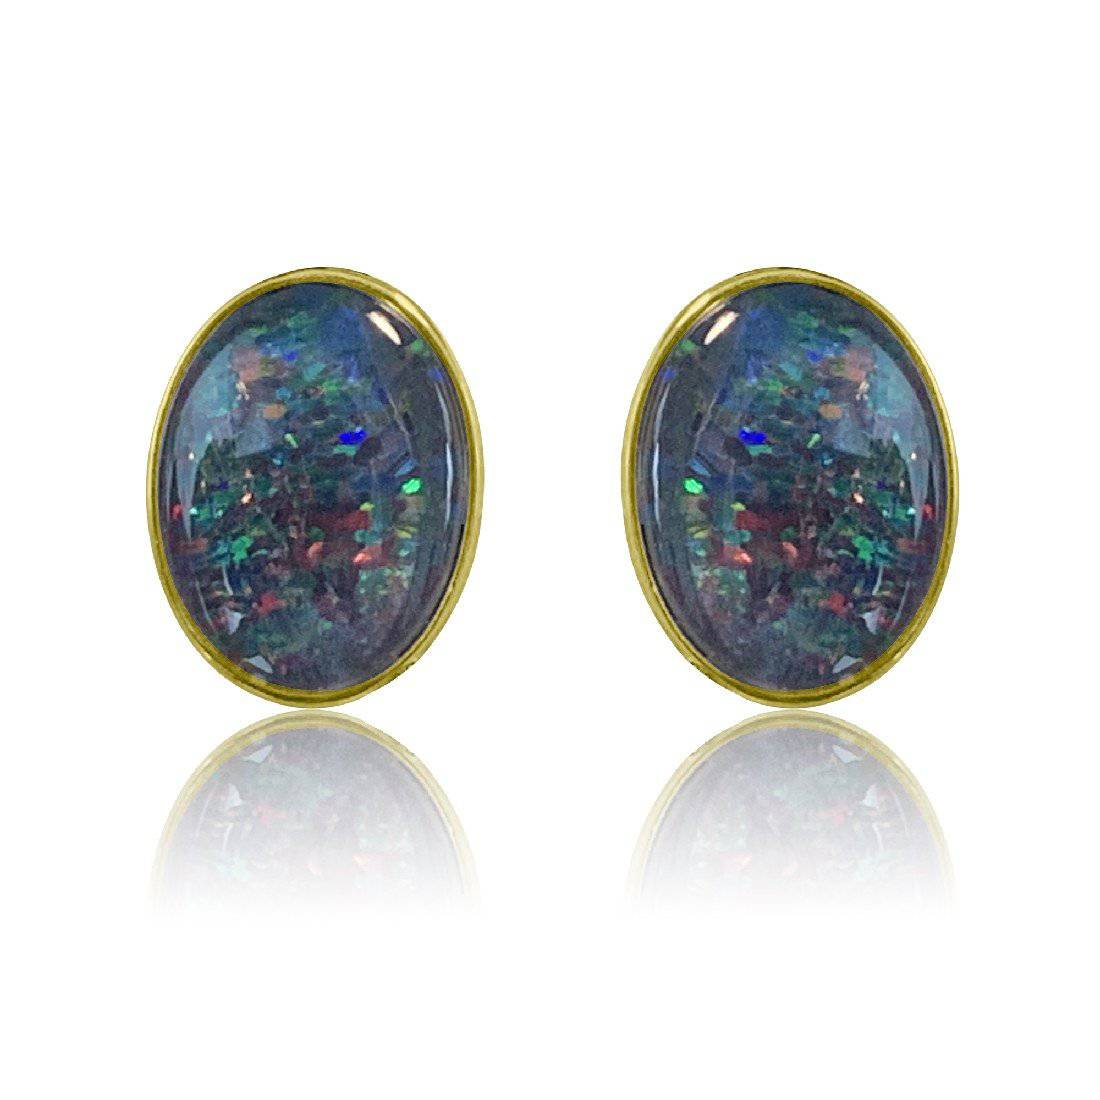 9kt Yellow Gold large Opal studs - Masterpiece Jewellery Opal & Gems Sydney Australia | Online Shop